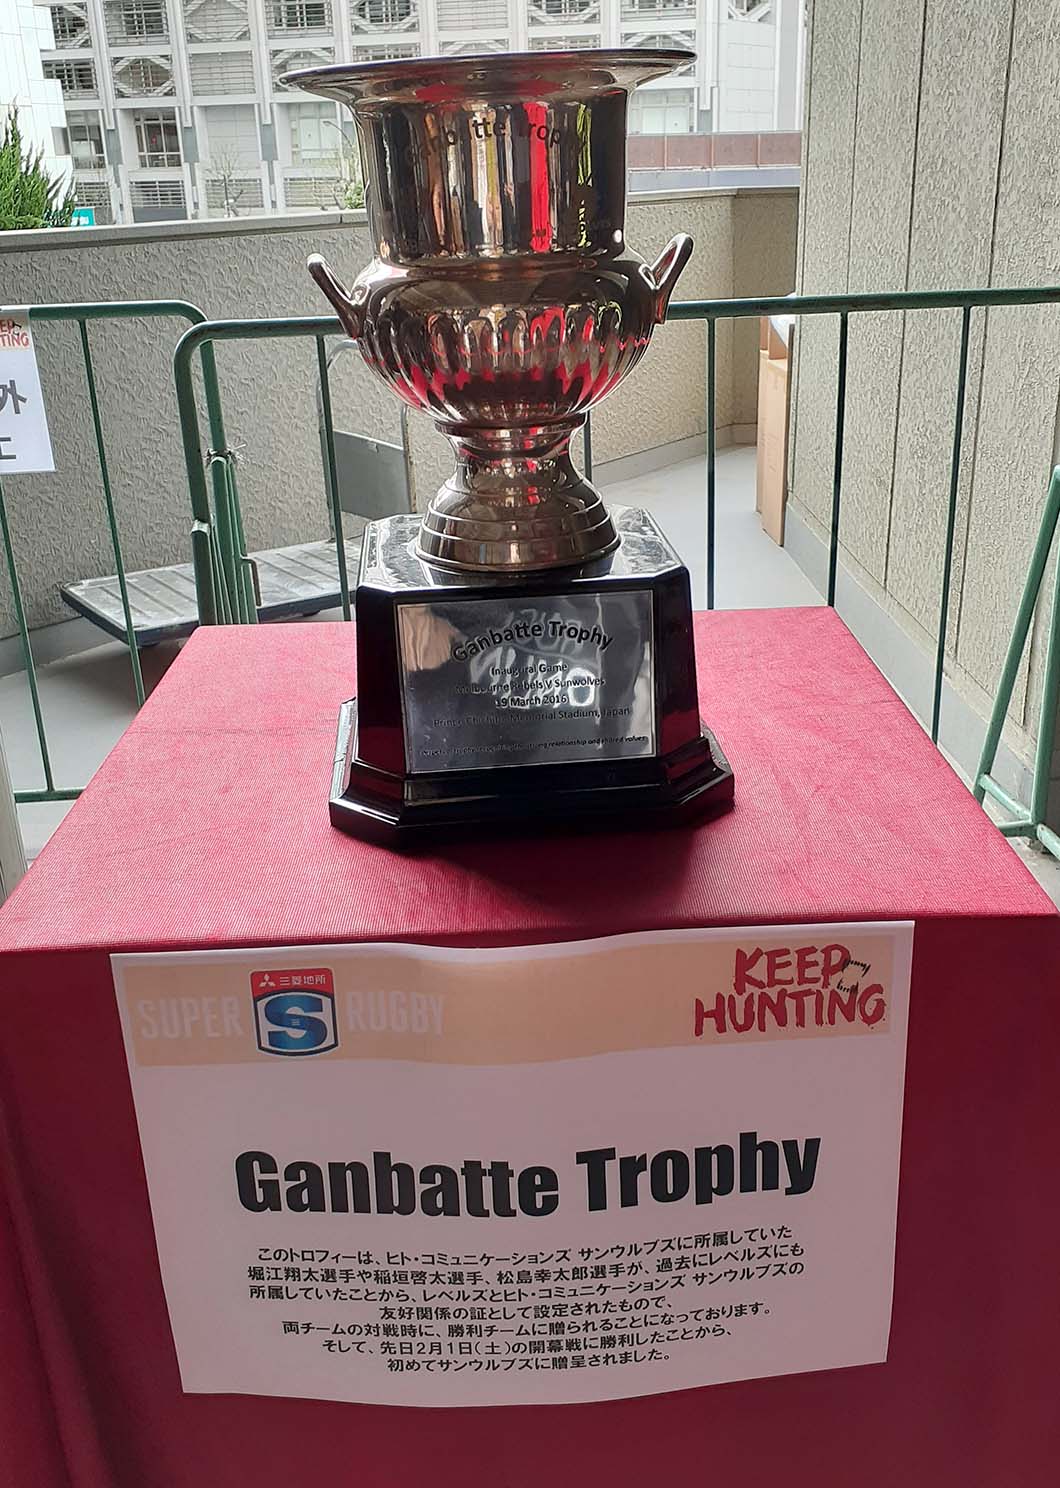 Ganbatte Trophy<br>
三菱地所スーパーラグビー2020 ROUND 3 vsチーフス